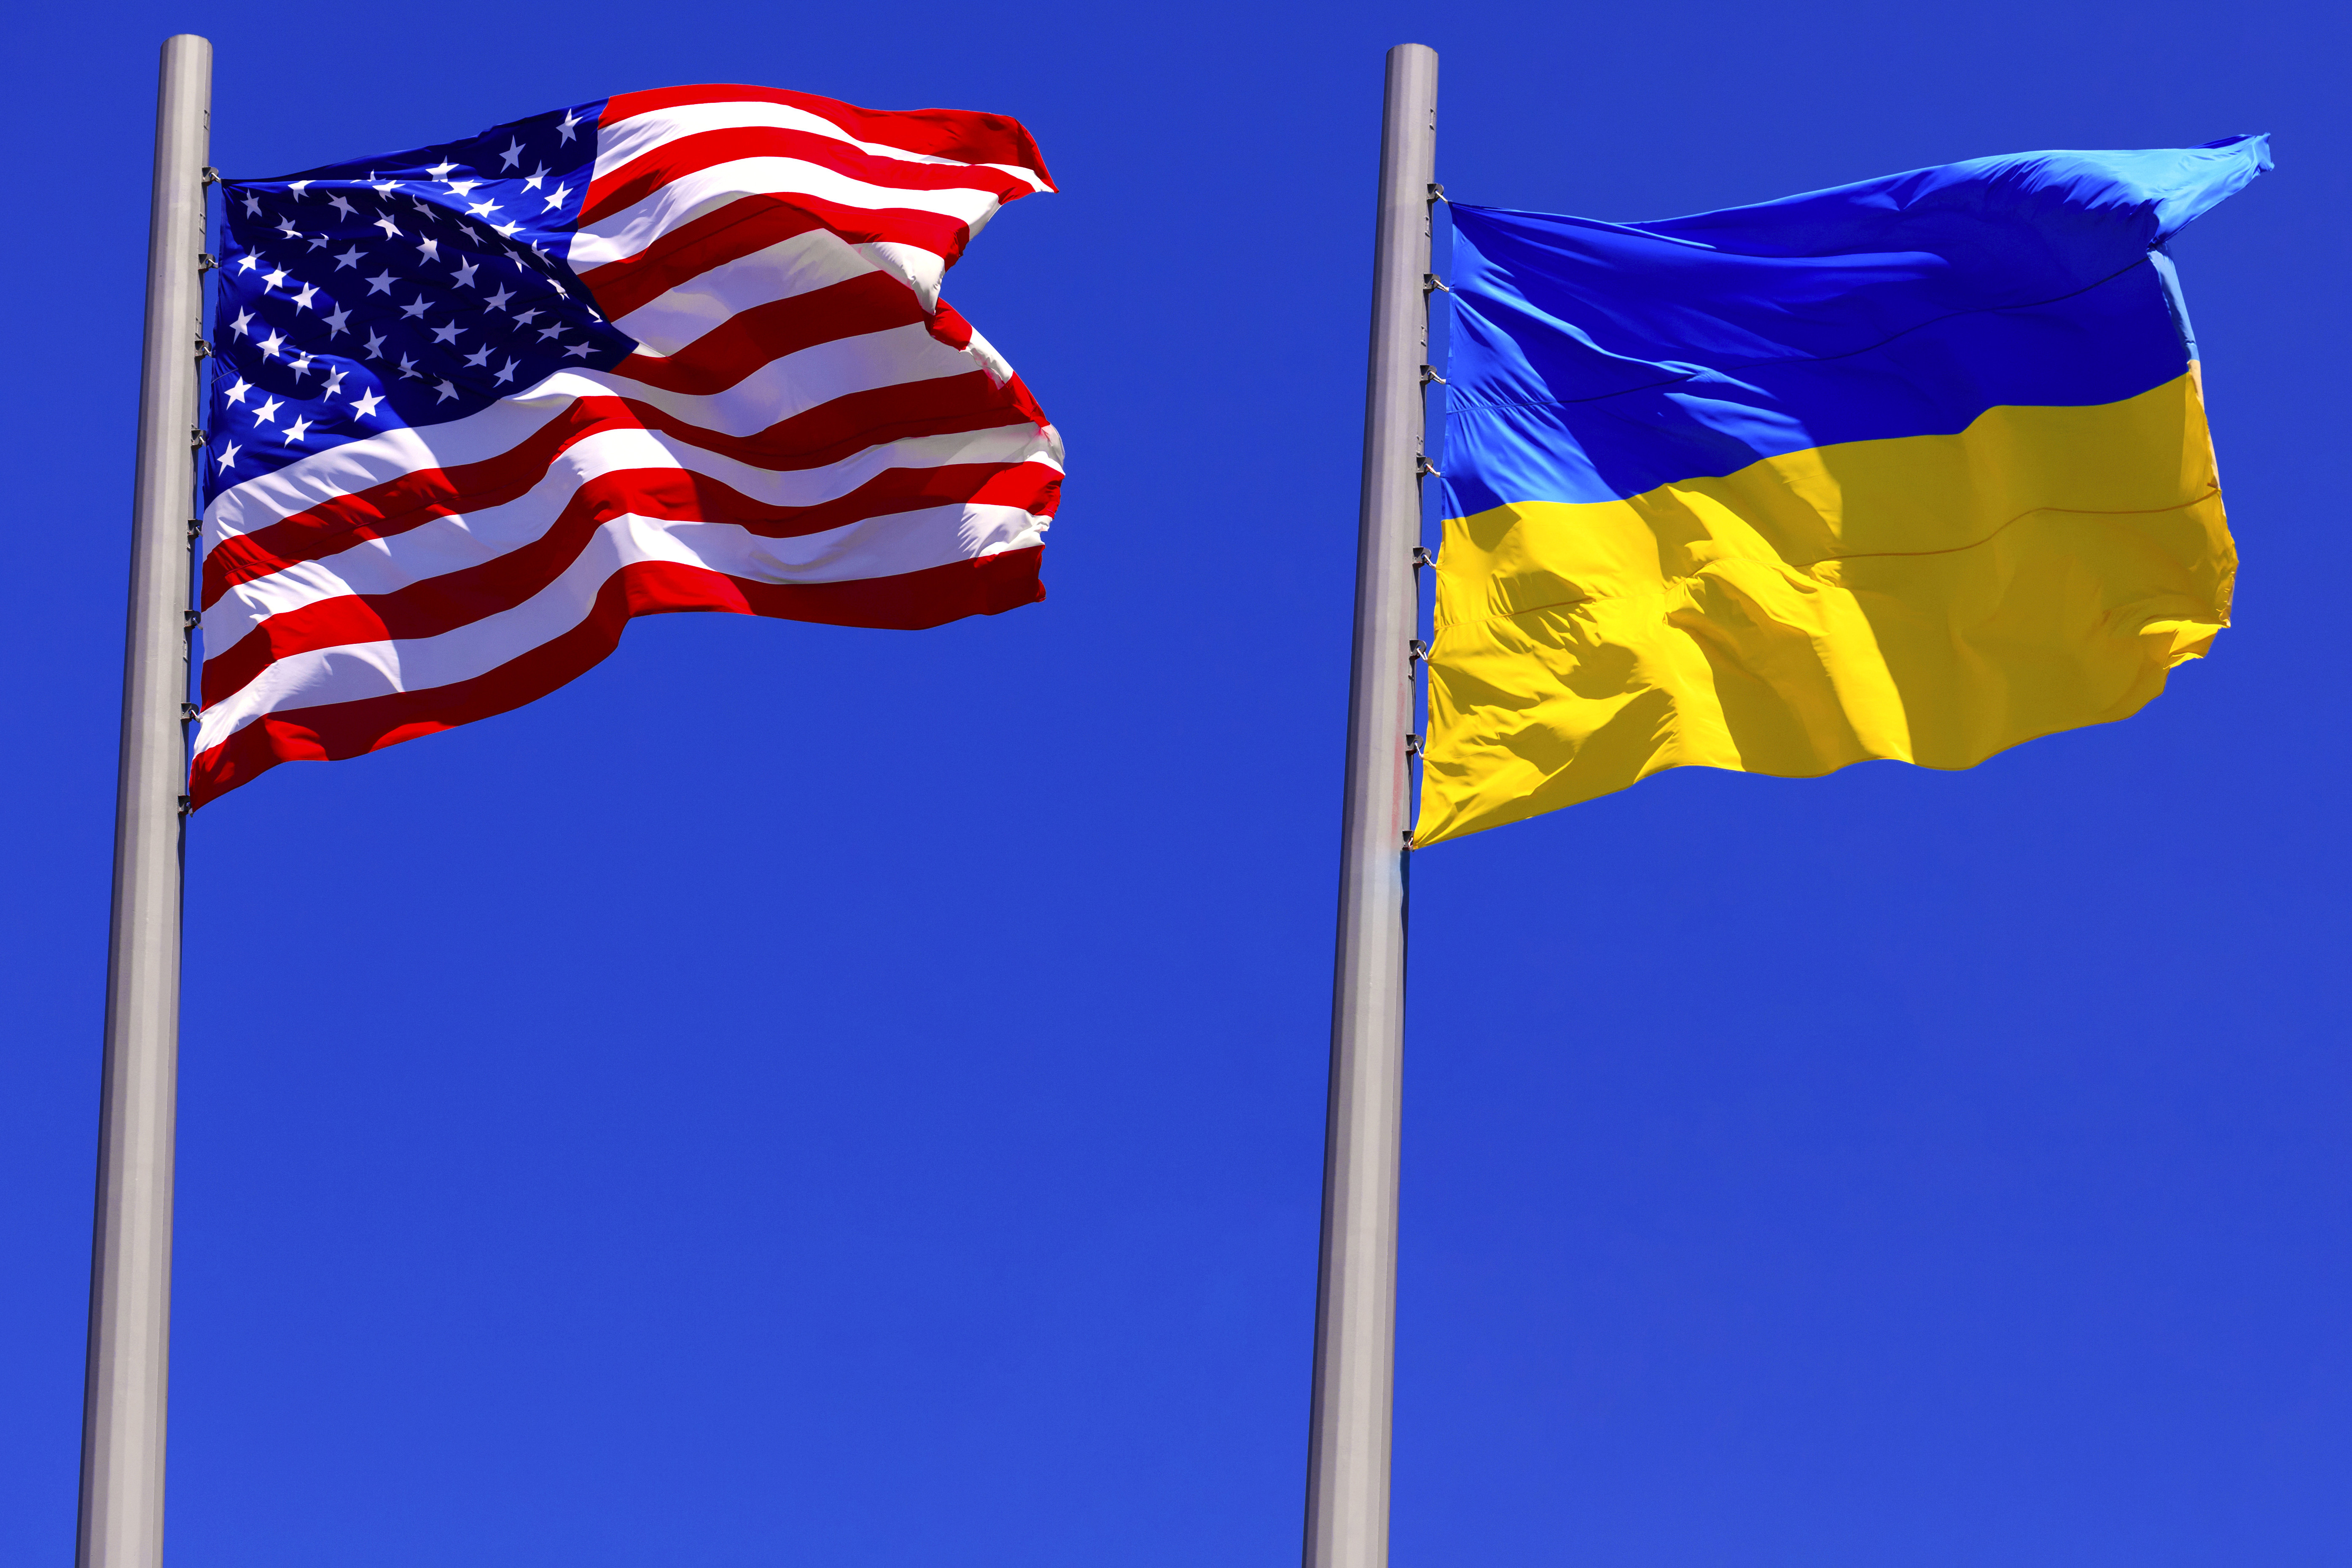 Telegraph: Nmetorszg blokkolja Ukrajna NATO trekvseit